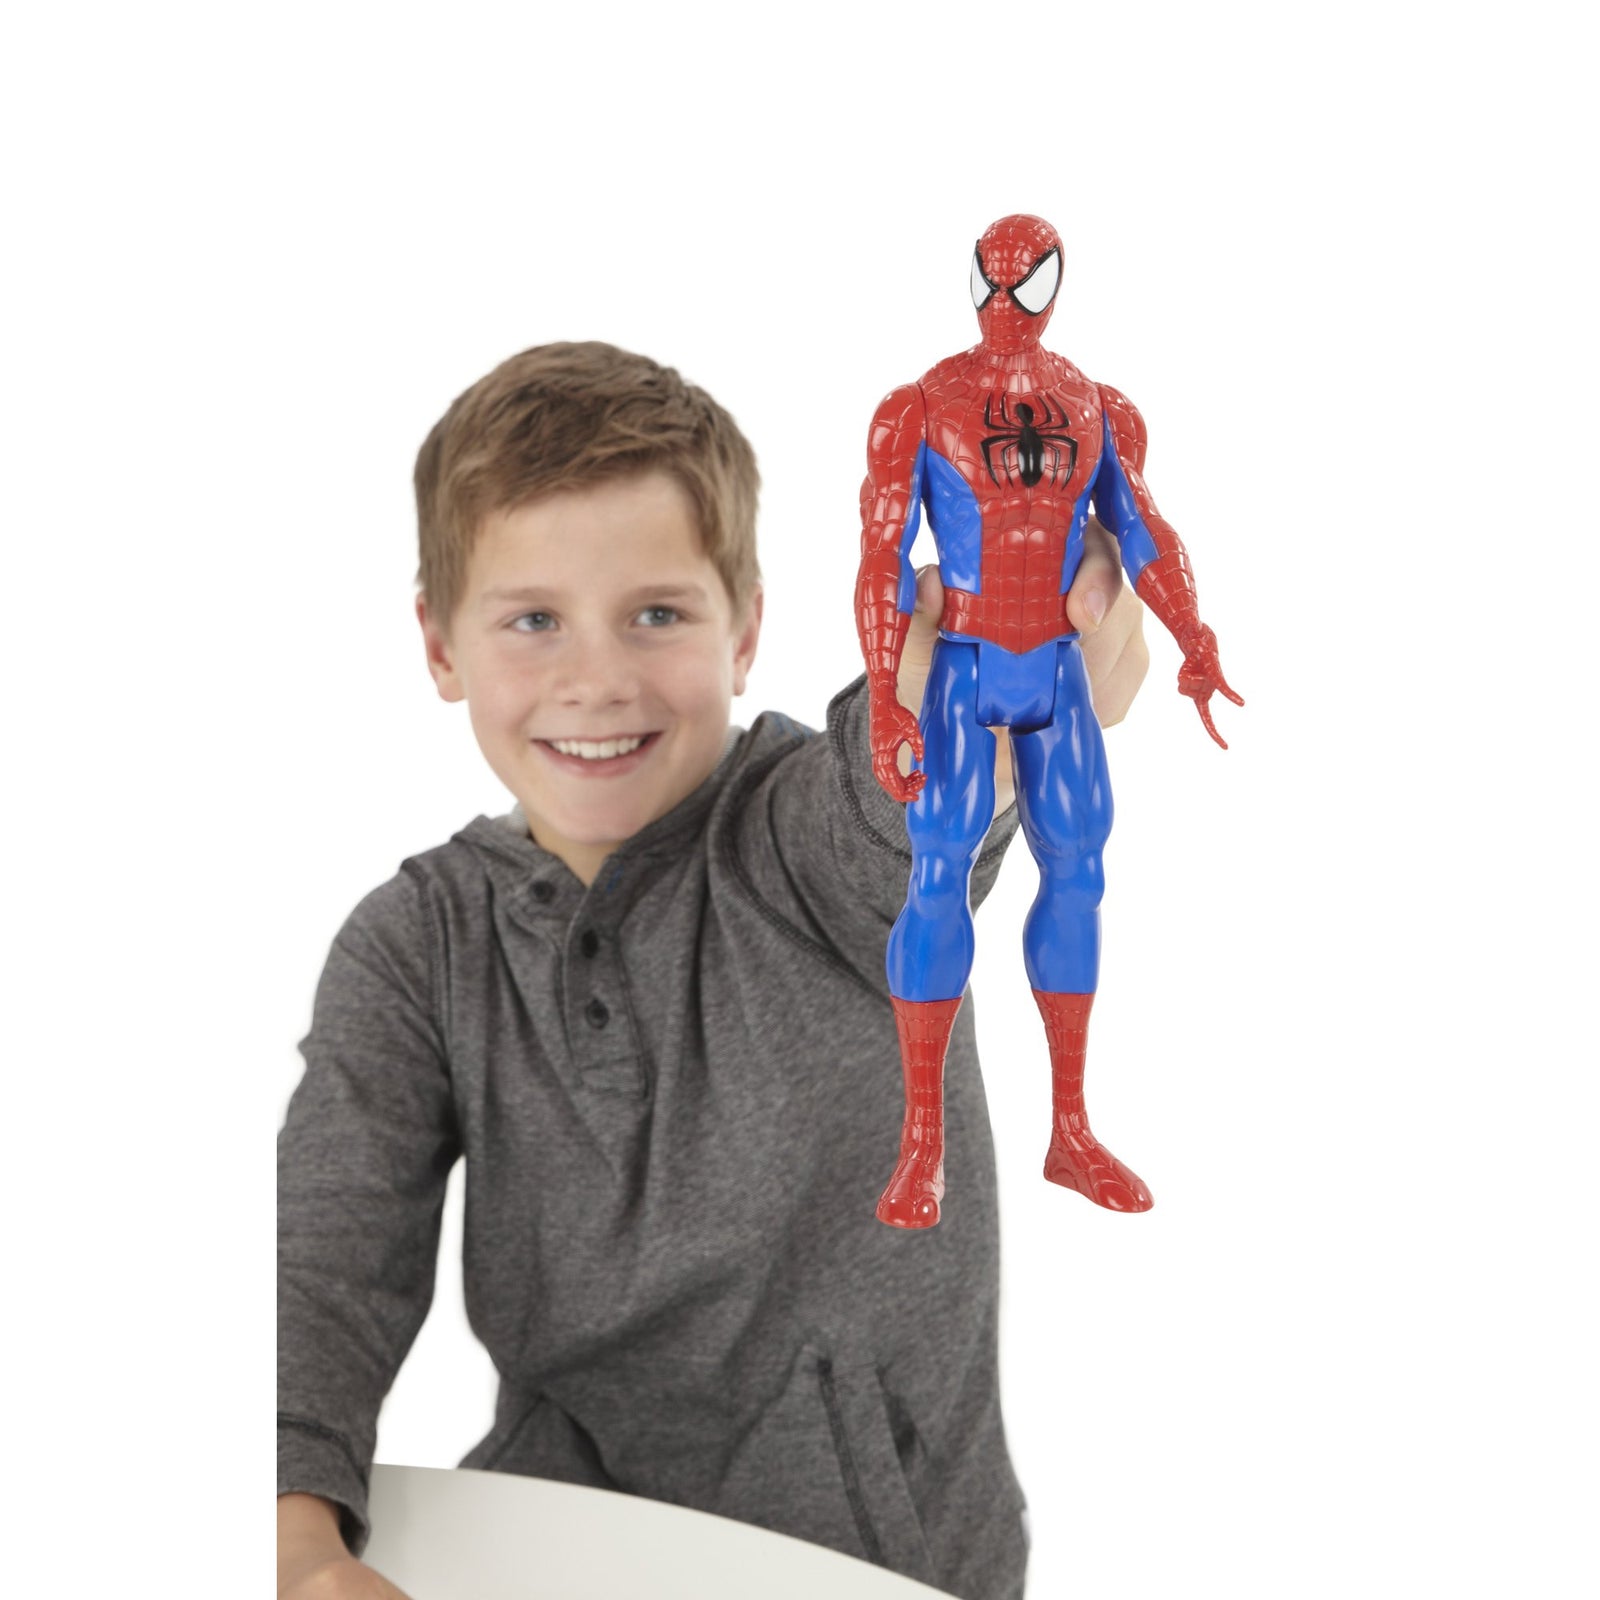 Marvel Ultimate Spider-man Titan Hero Series Spider-man Figure, 12-Inch